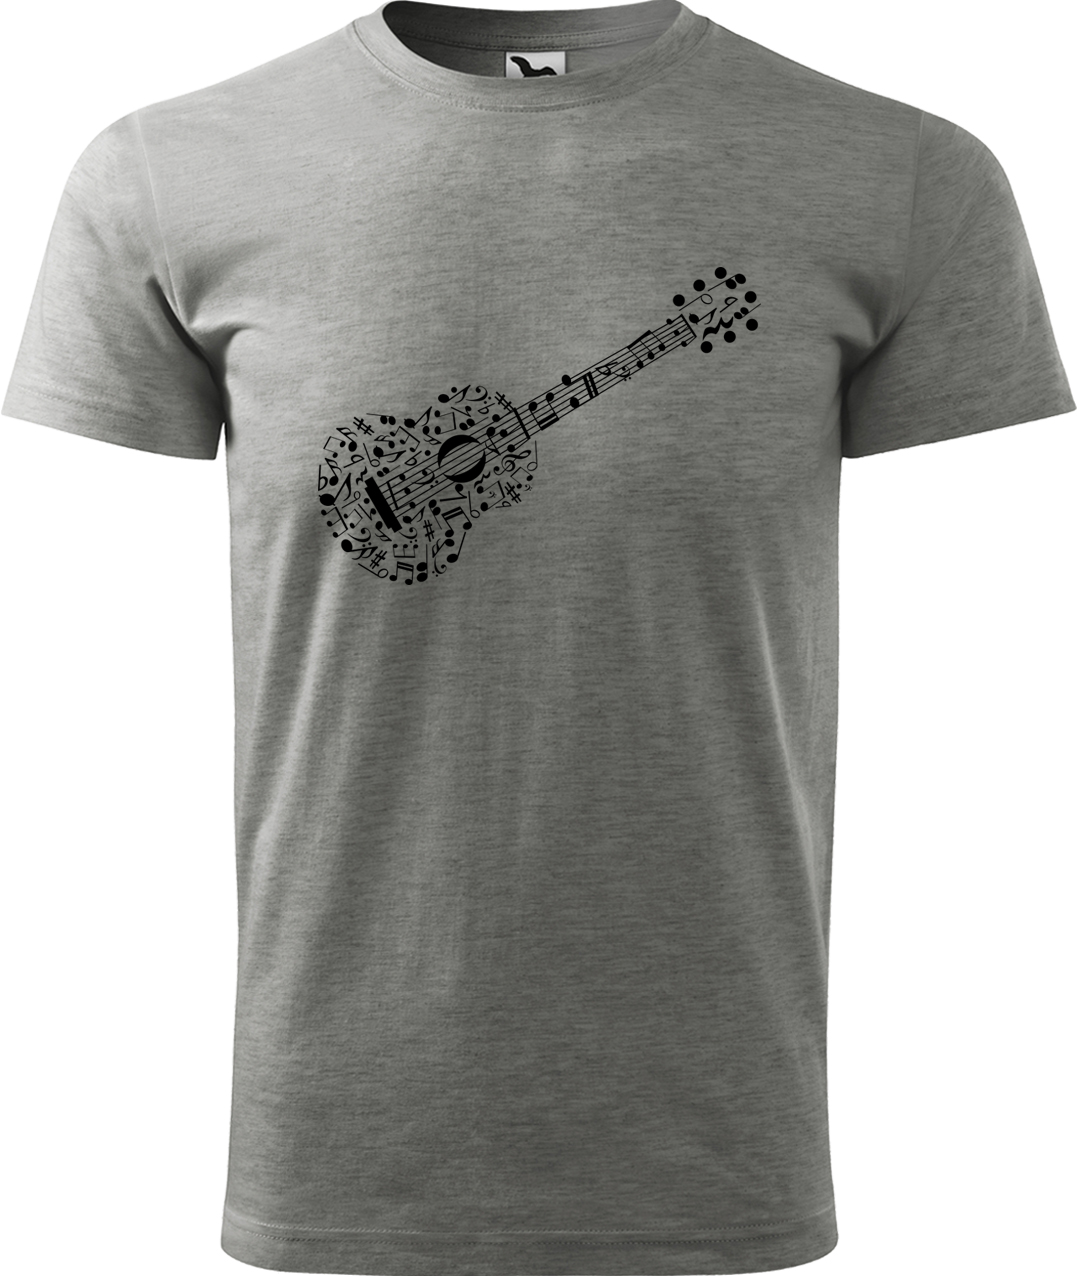 Pánské tričko s kytarou - Kytara z not Velikost: S, Barva: Tmavě šedý melír (12), Střih: pánský